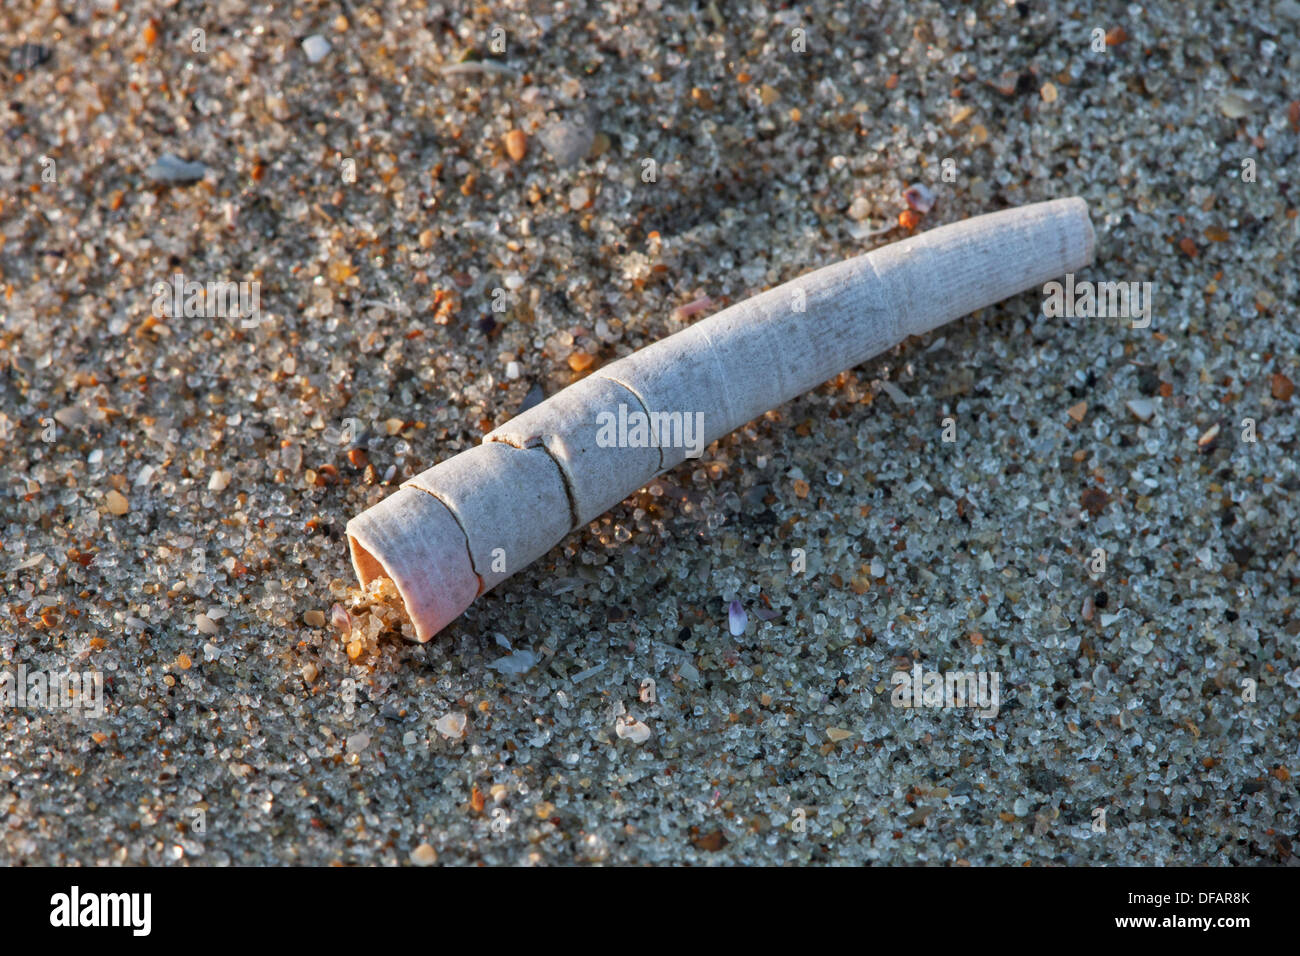 Common Tusk (Dentalium vulgare) on beach along the Norths Sea coast Stock Photo